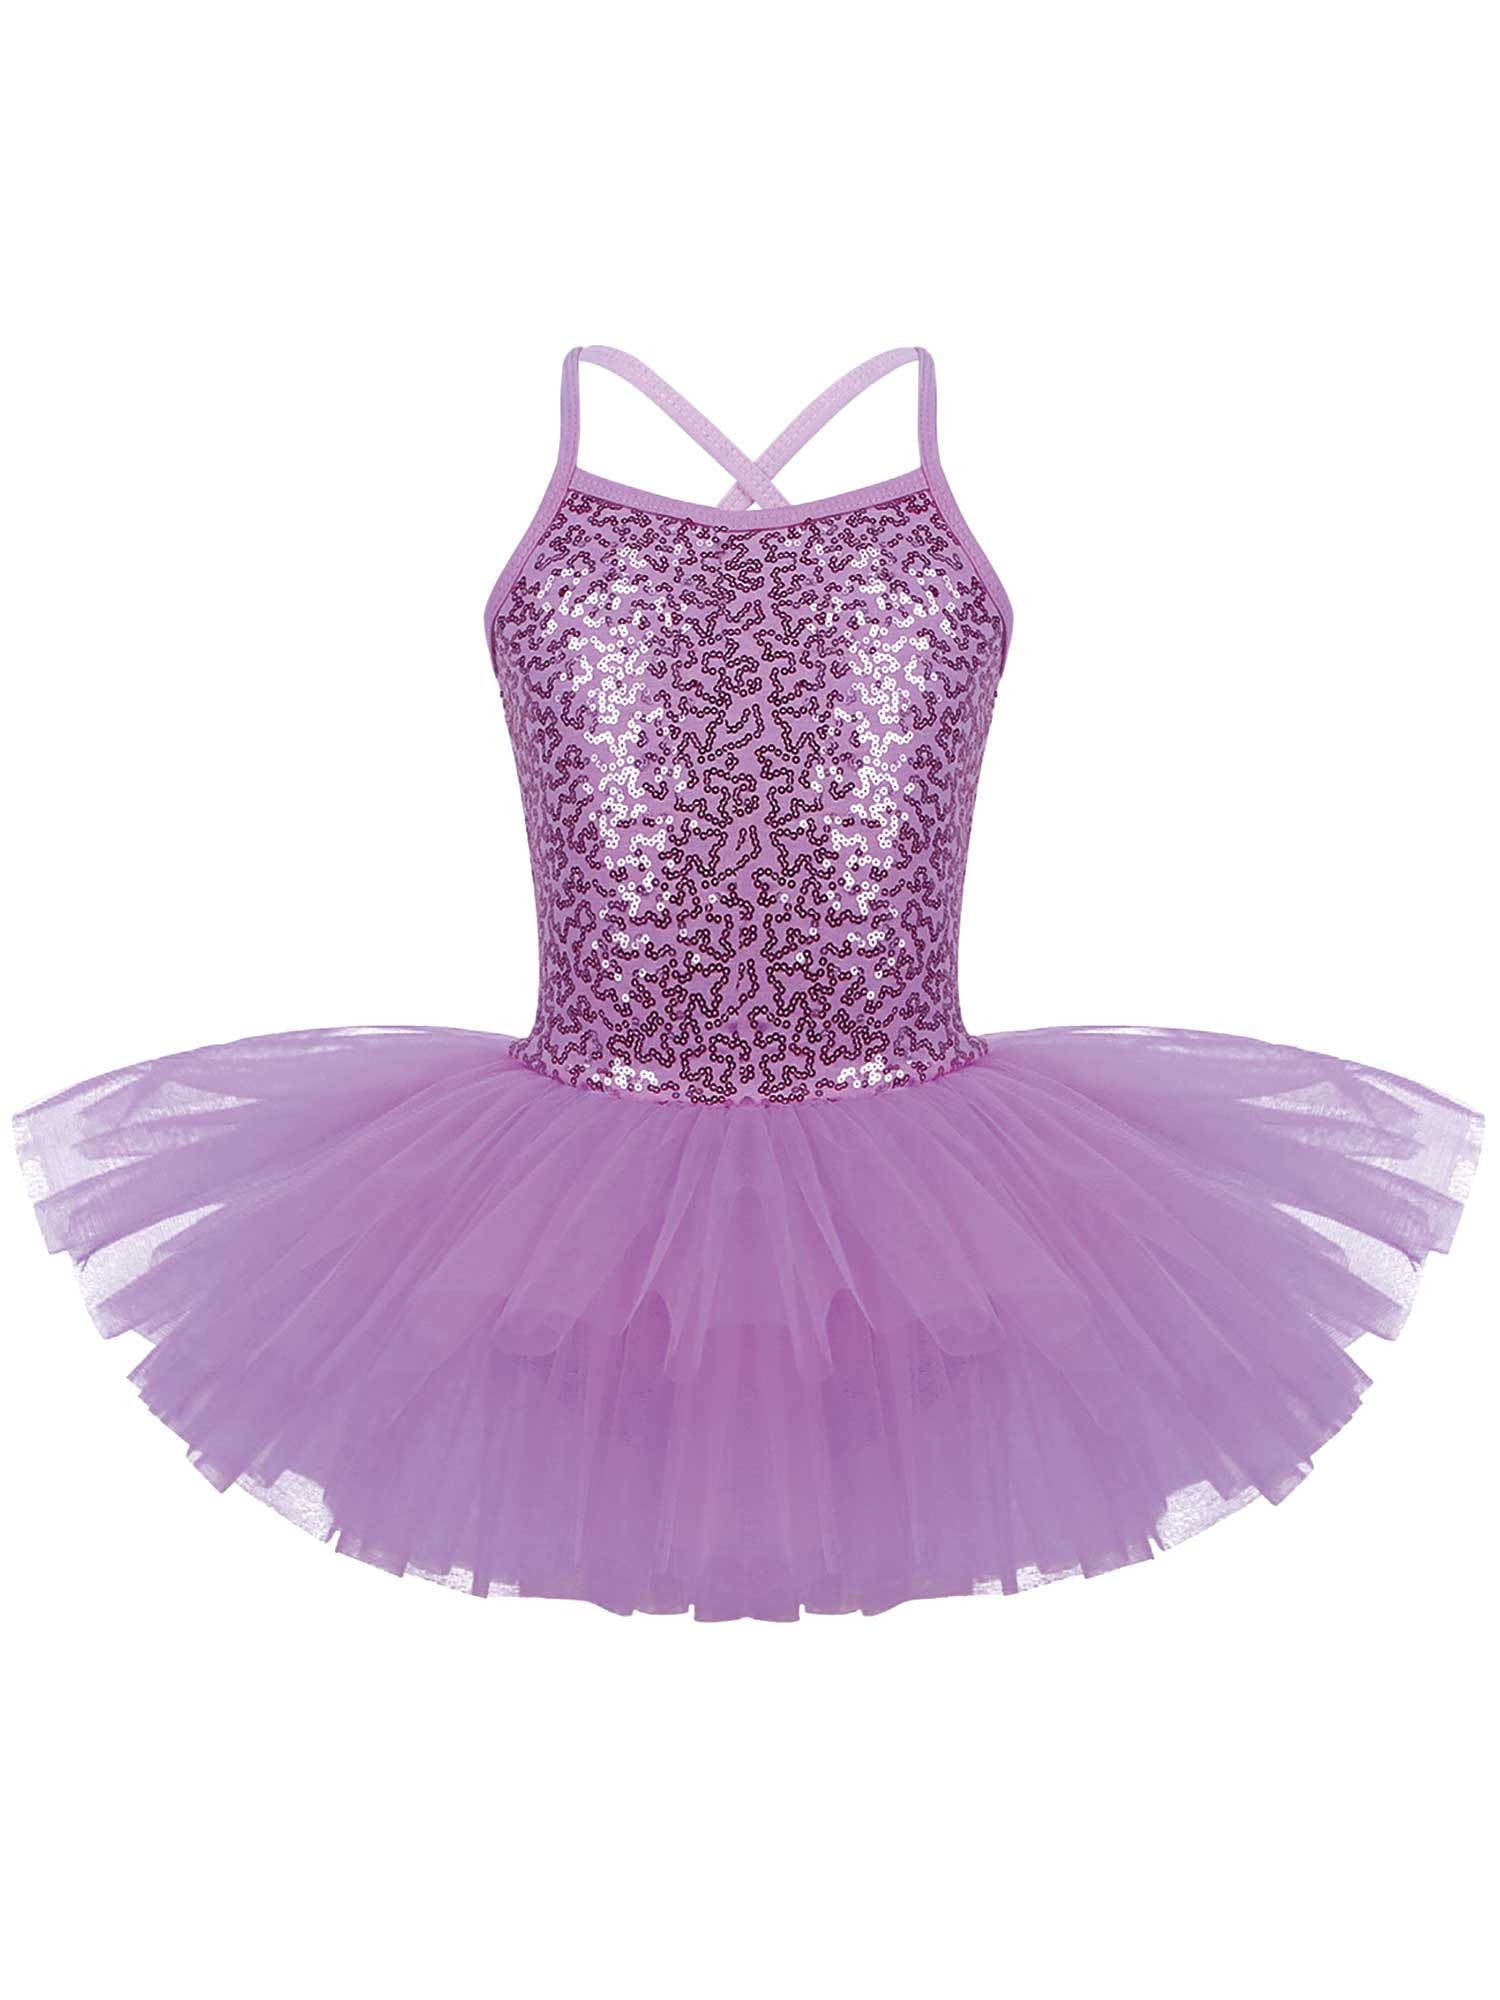 Girls Sequin Ballet Dance Dress Gymnastic Leotard Ballerina Tutu Skirt Costume 